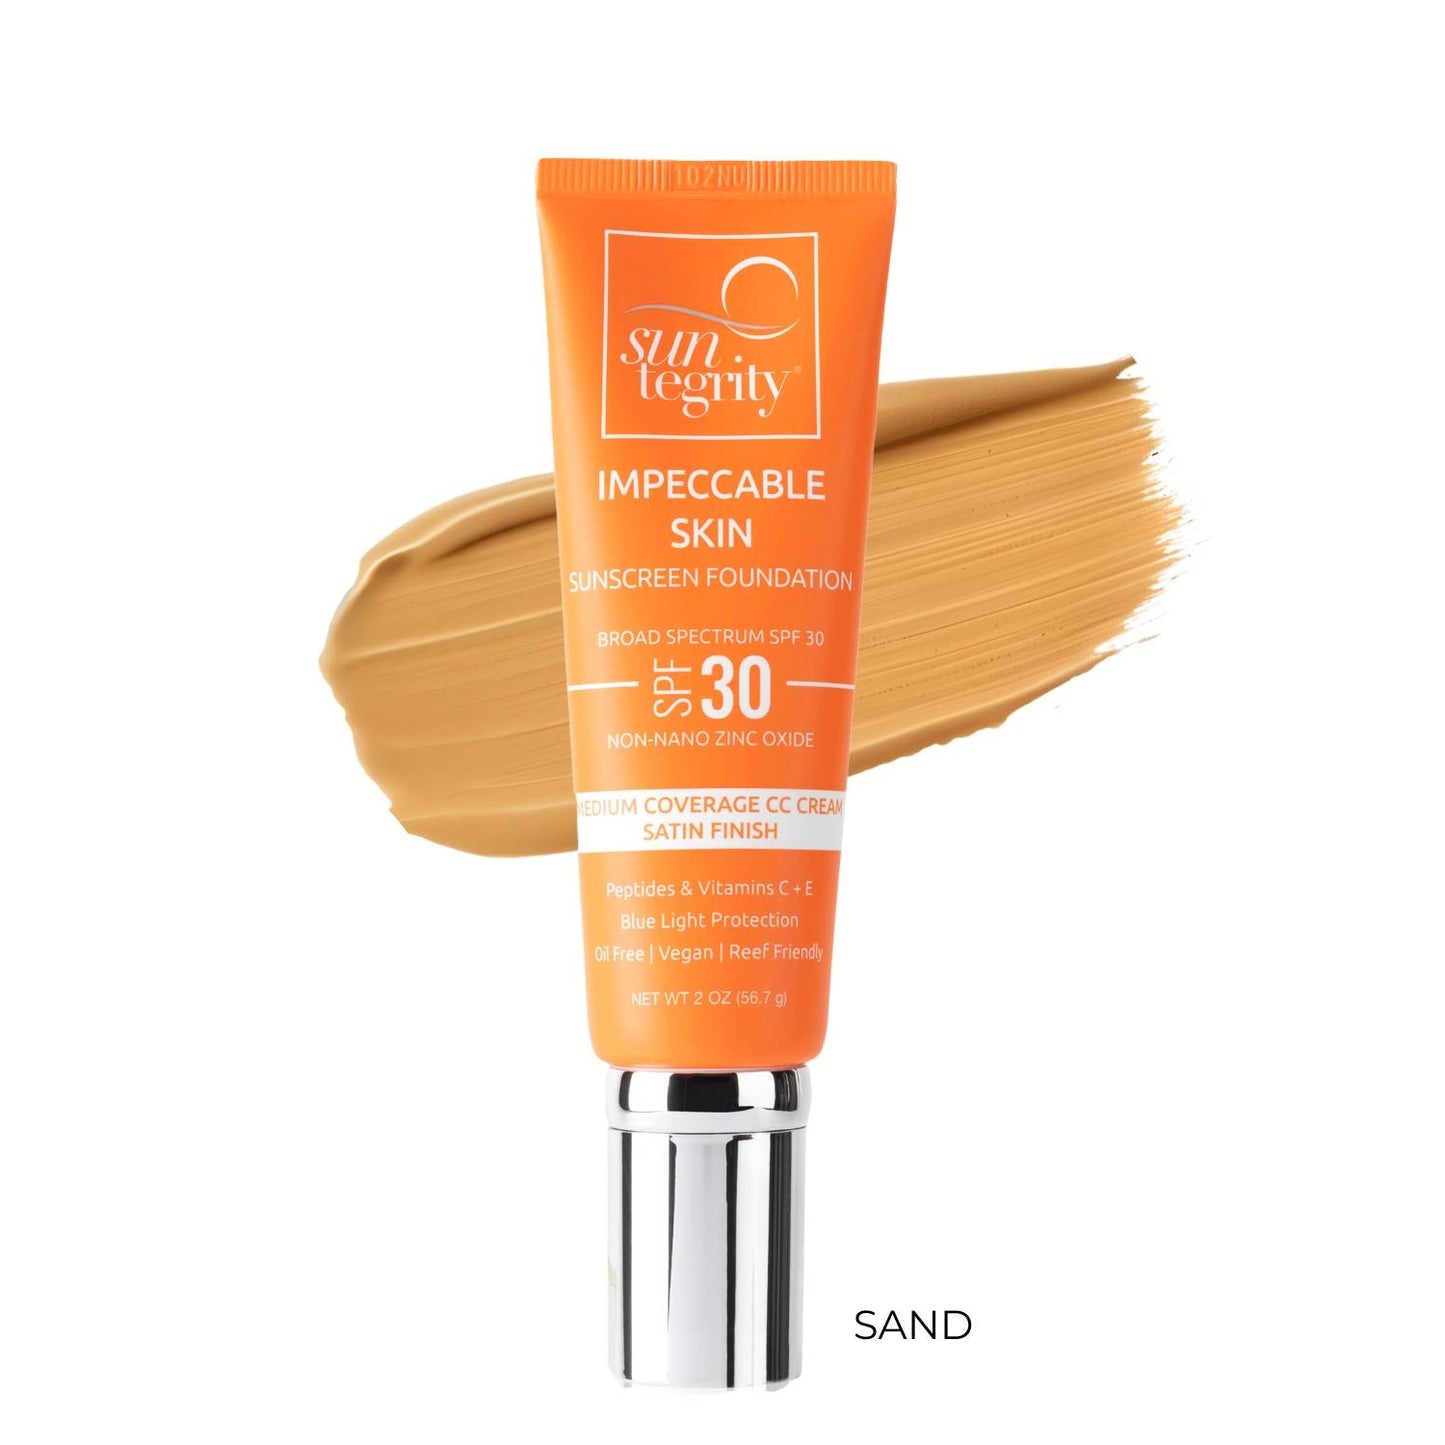 SUNTEGRITY Impeccable Skin, Broad Spectrum SPF 30 sand